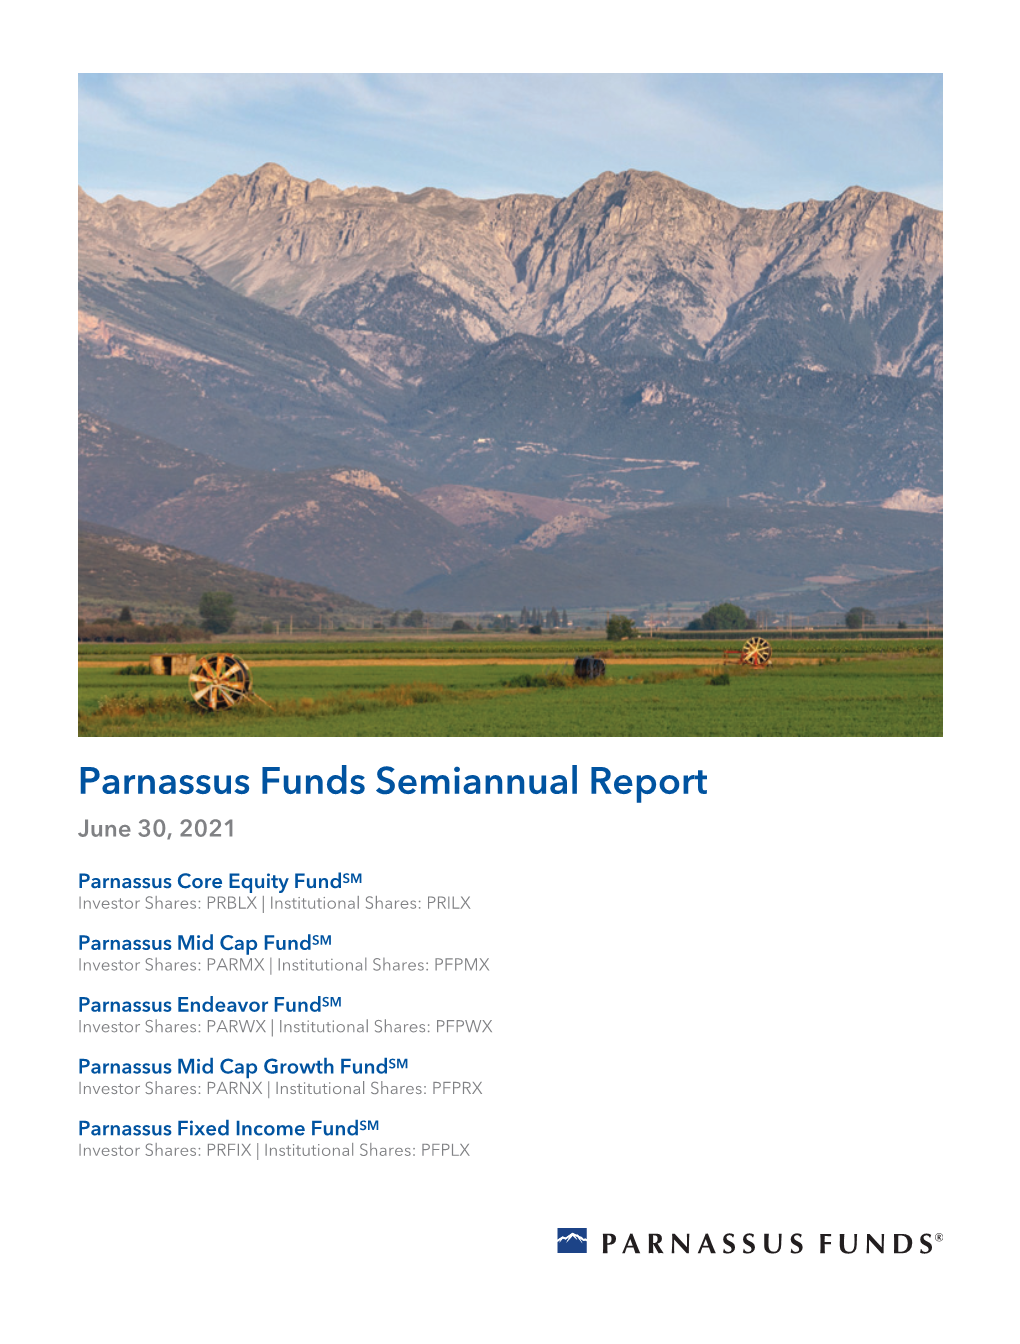 Parnassus Funds Semiannual Report June 30, 2021